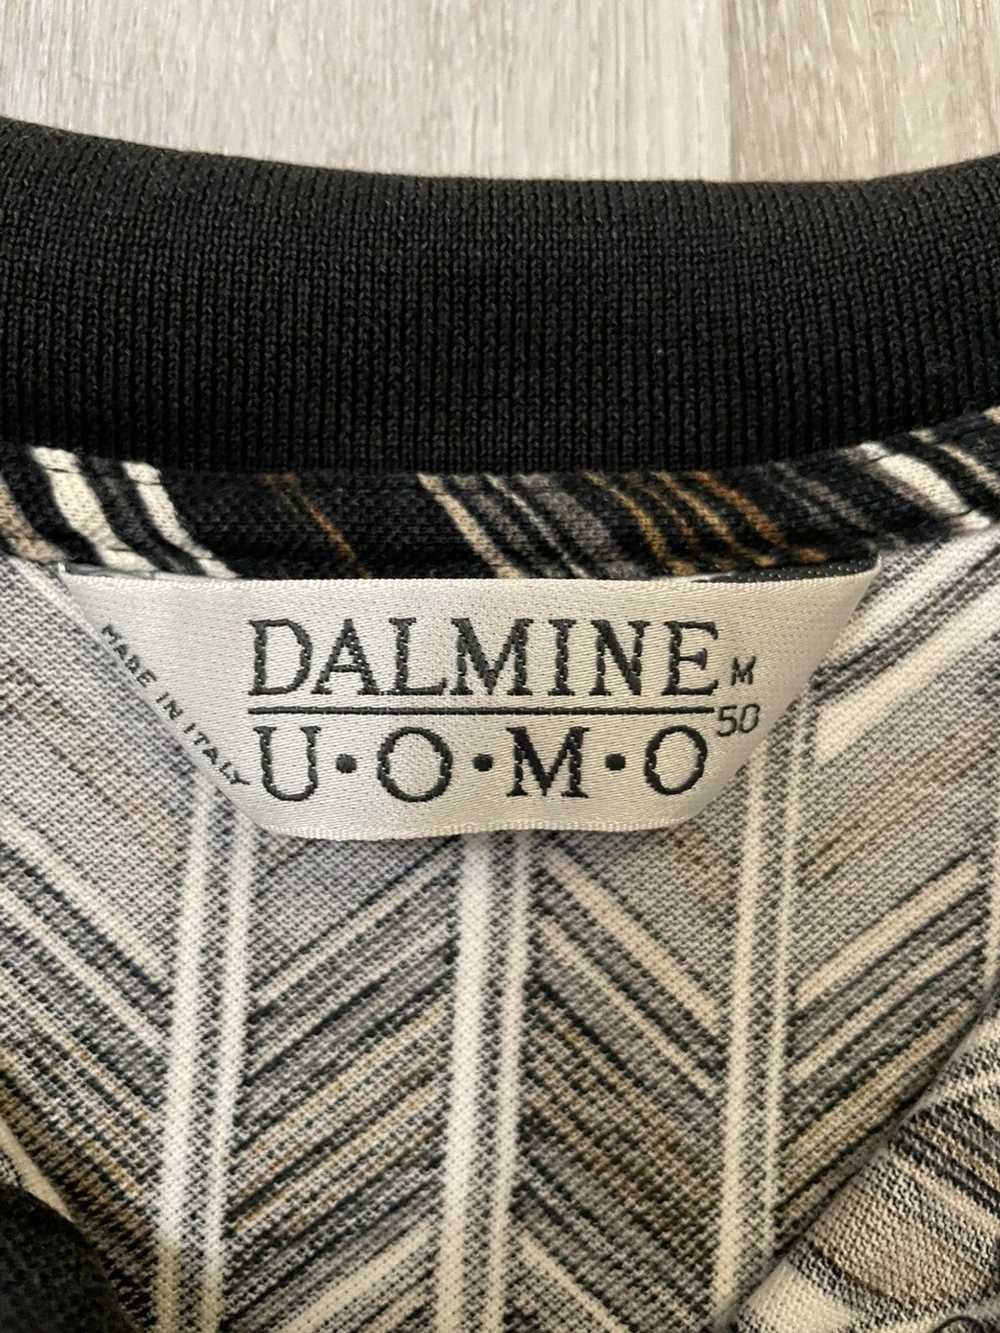 Dalmine Vintage Italian Polo - image 2